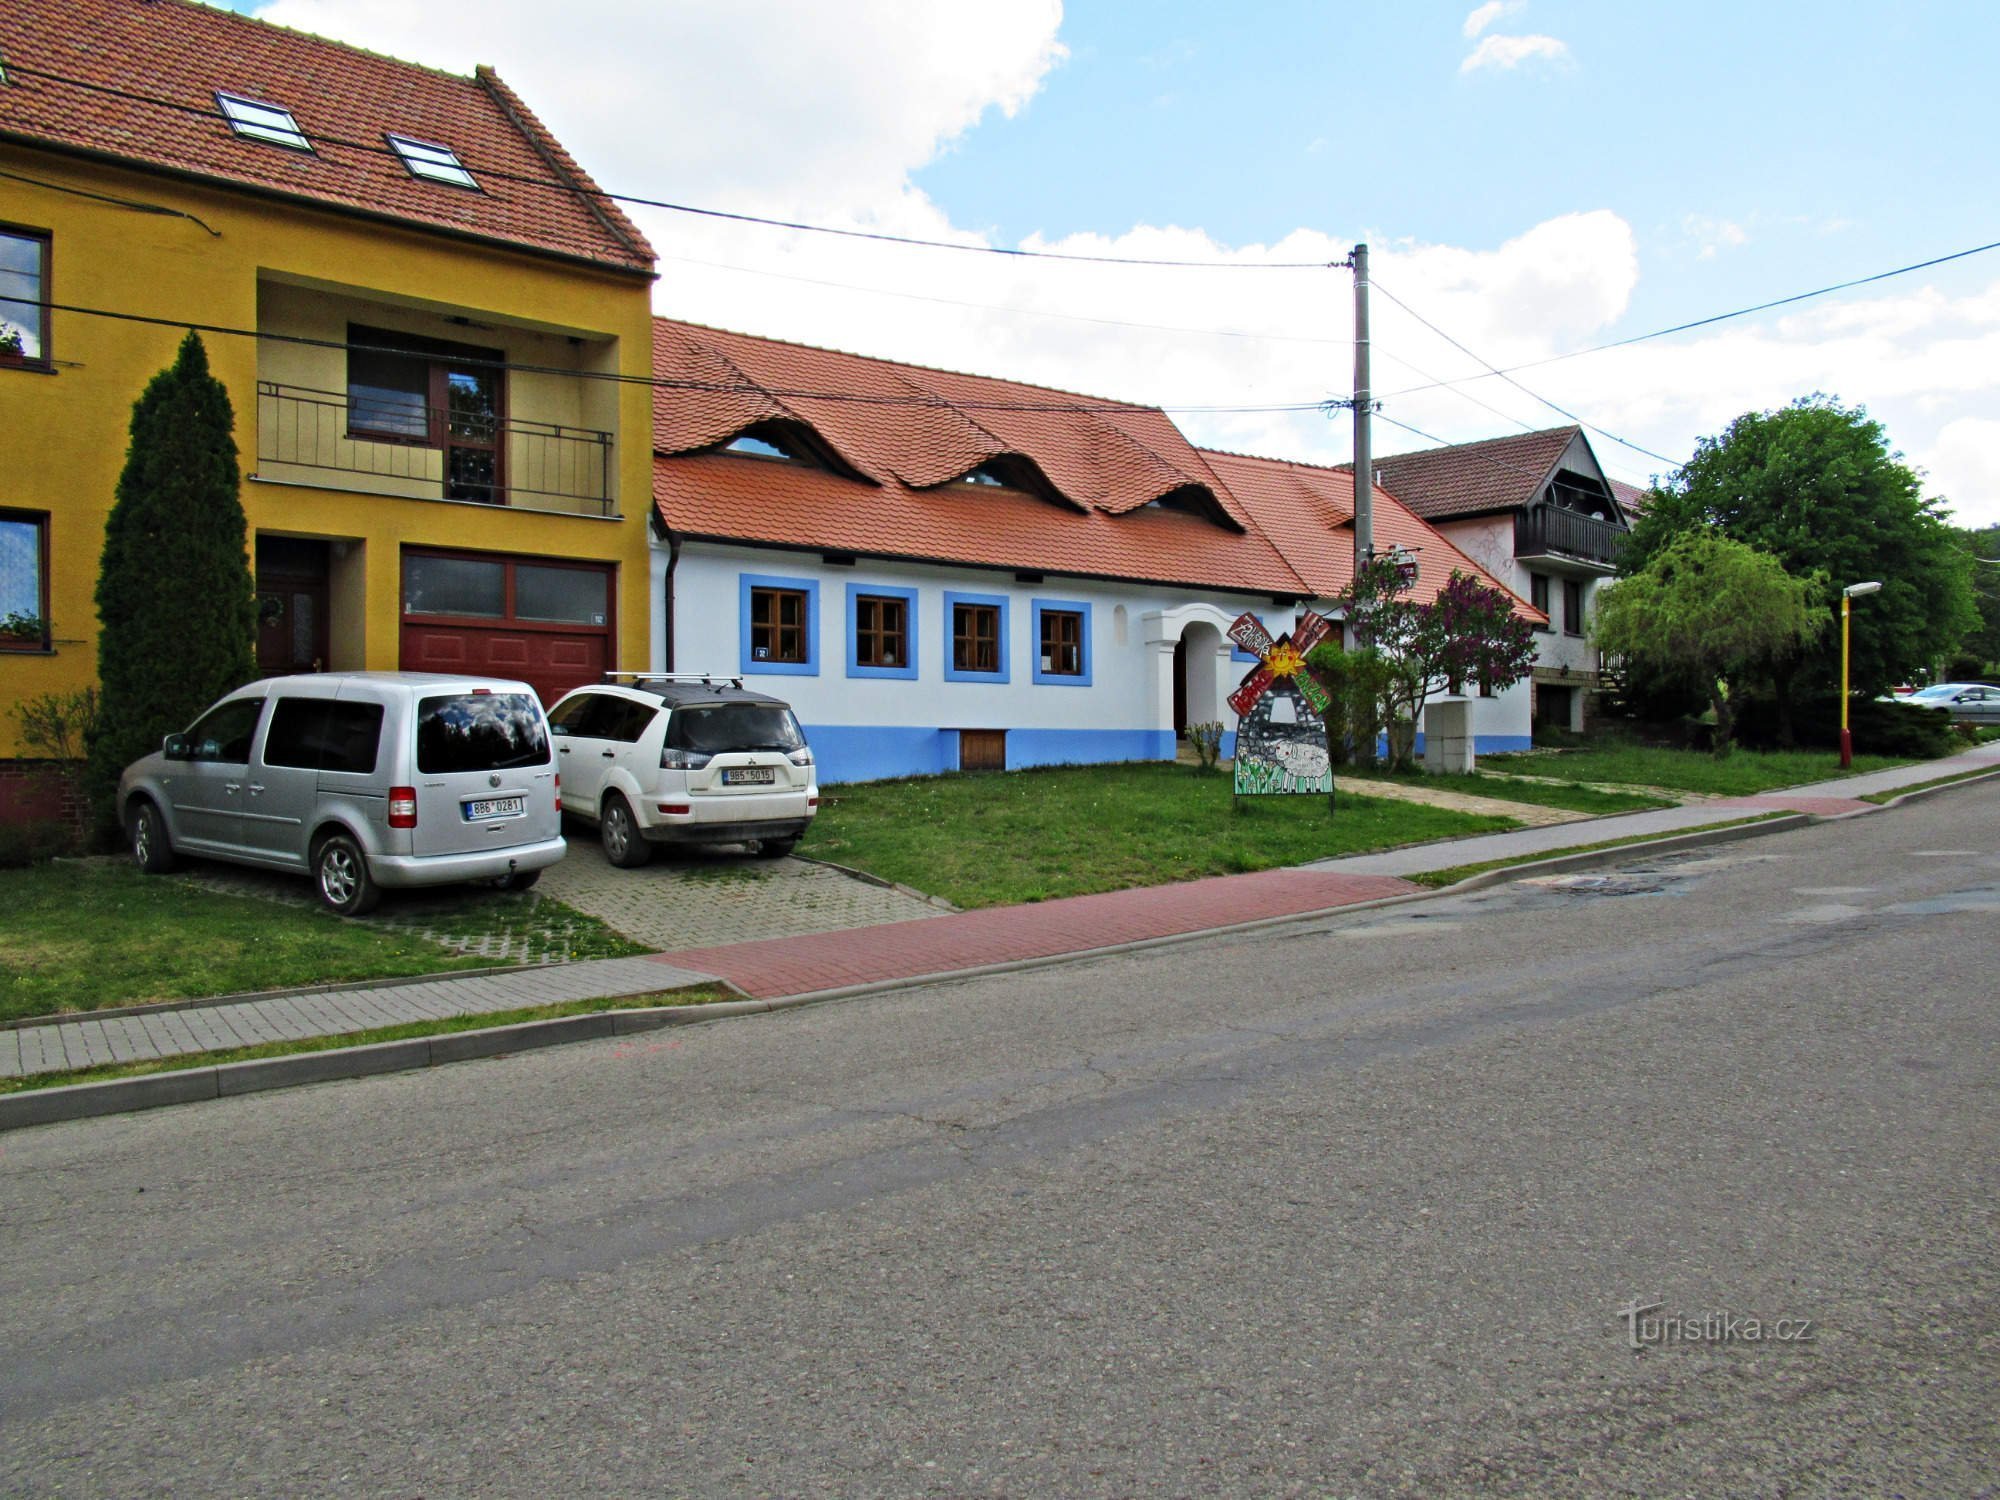 Pensione U větrného mlýna nel villaggio di Kuželov in Slovácko